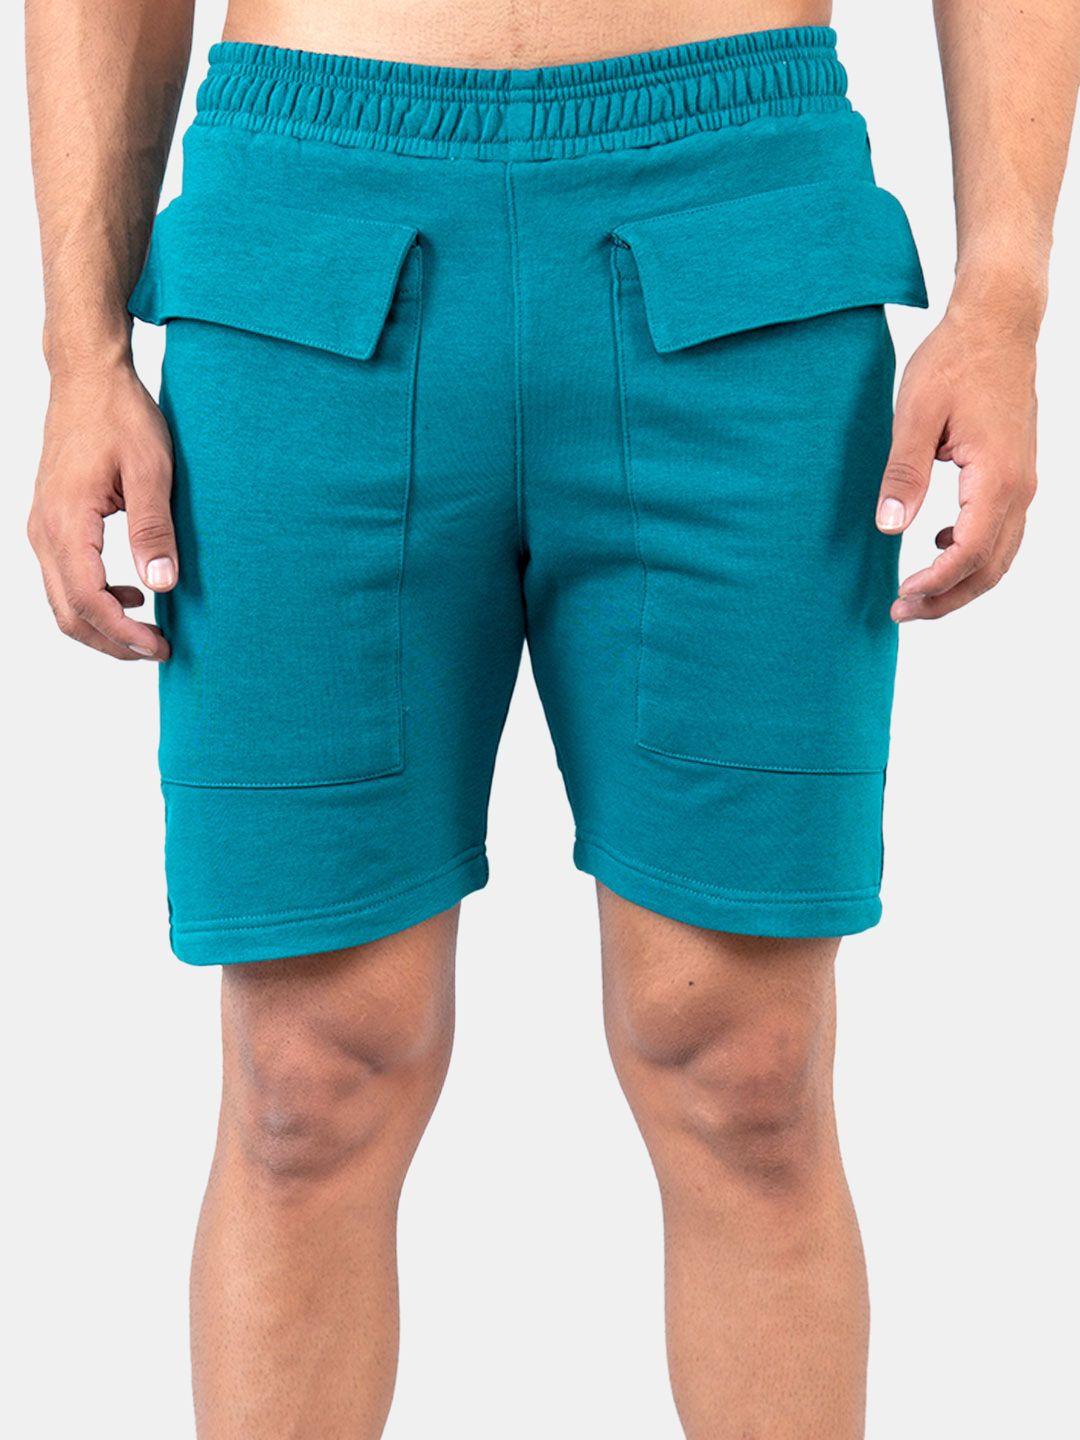 tistabene men mid-rise cotton shorts